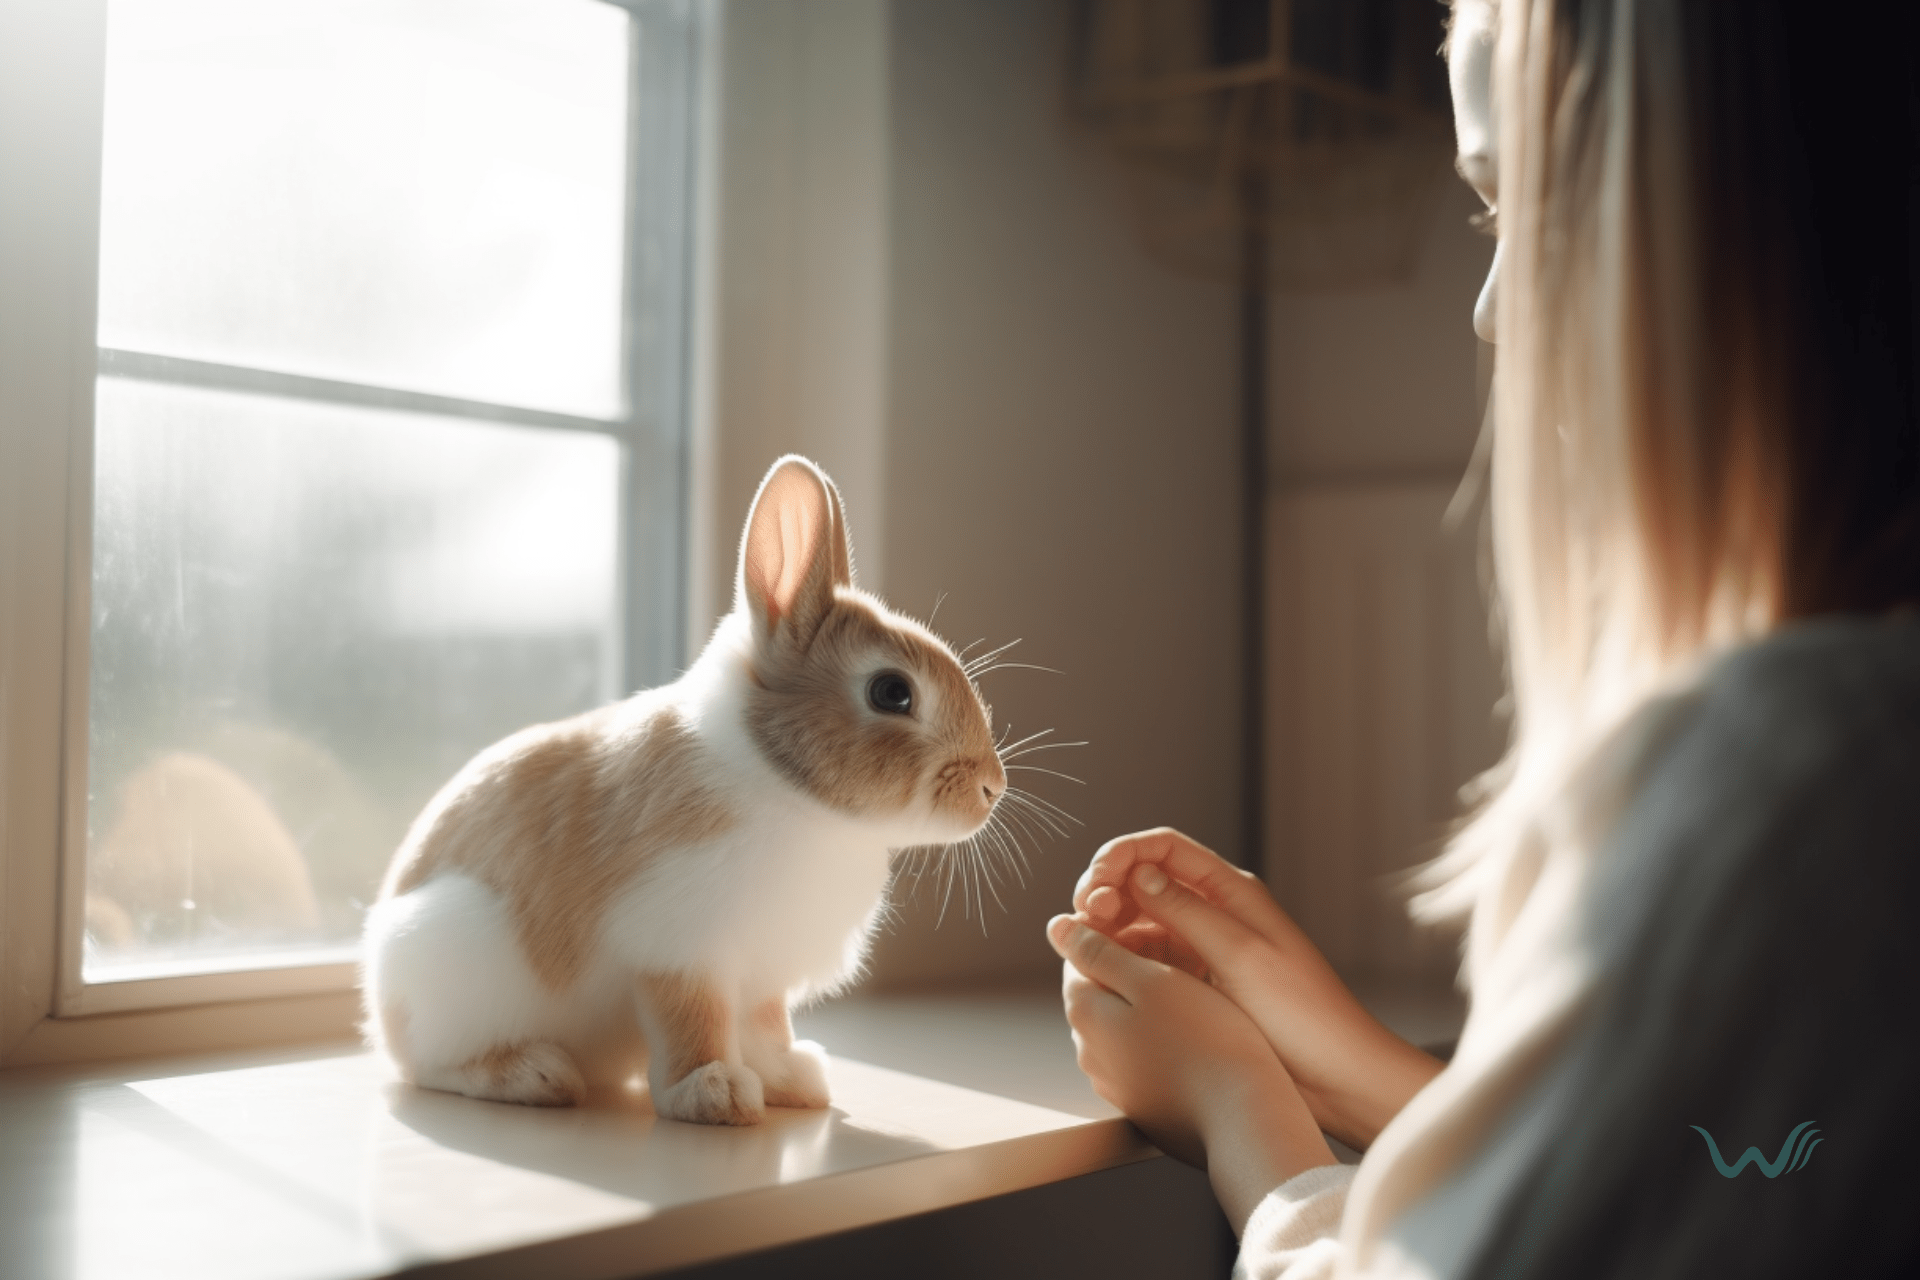 positive reinforcement for rabbits